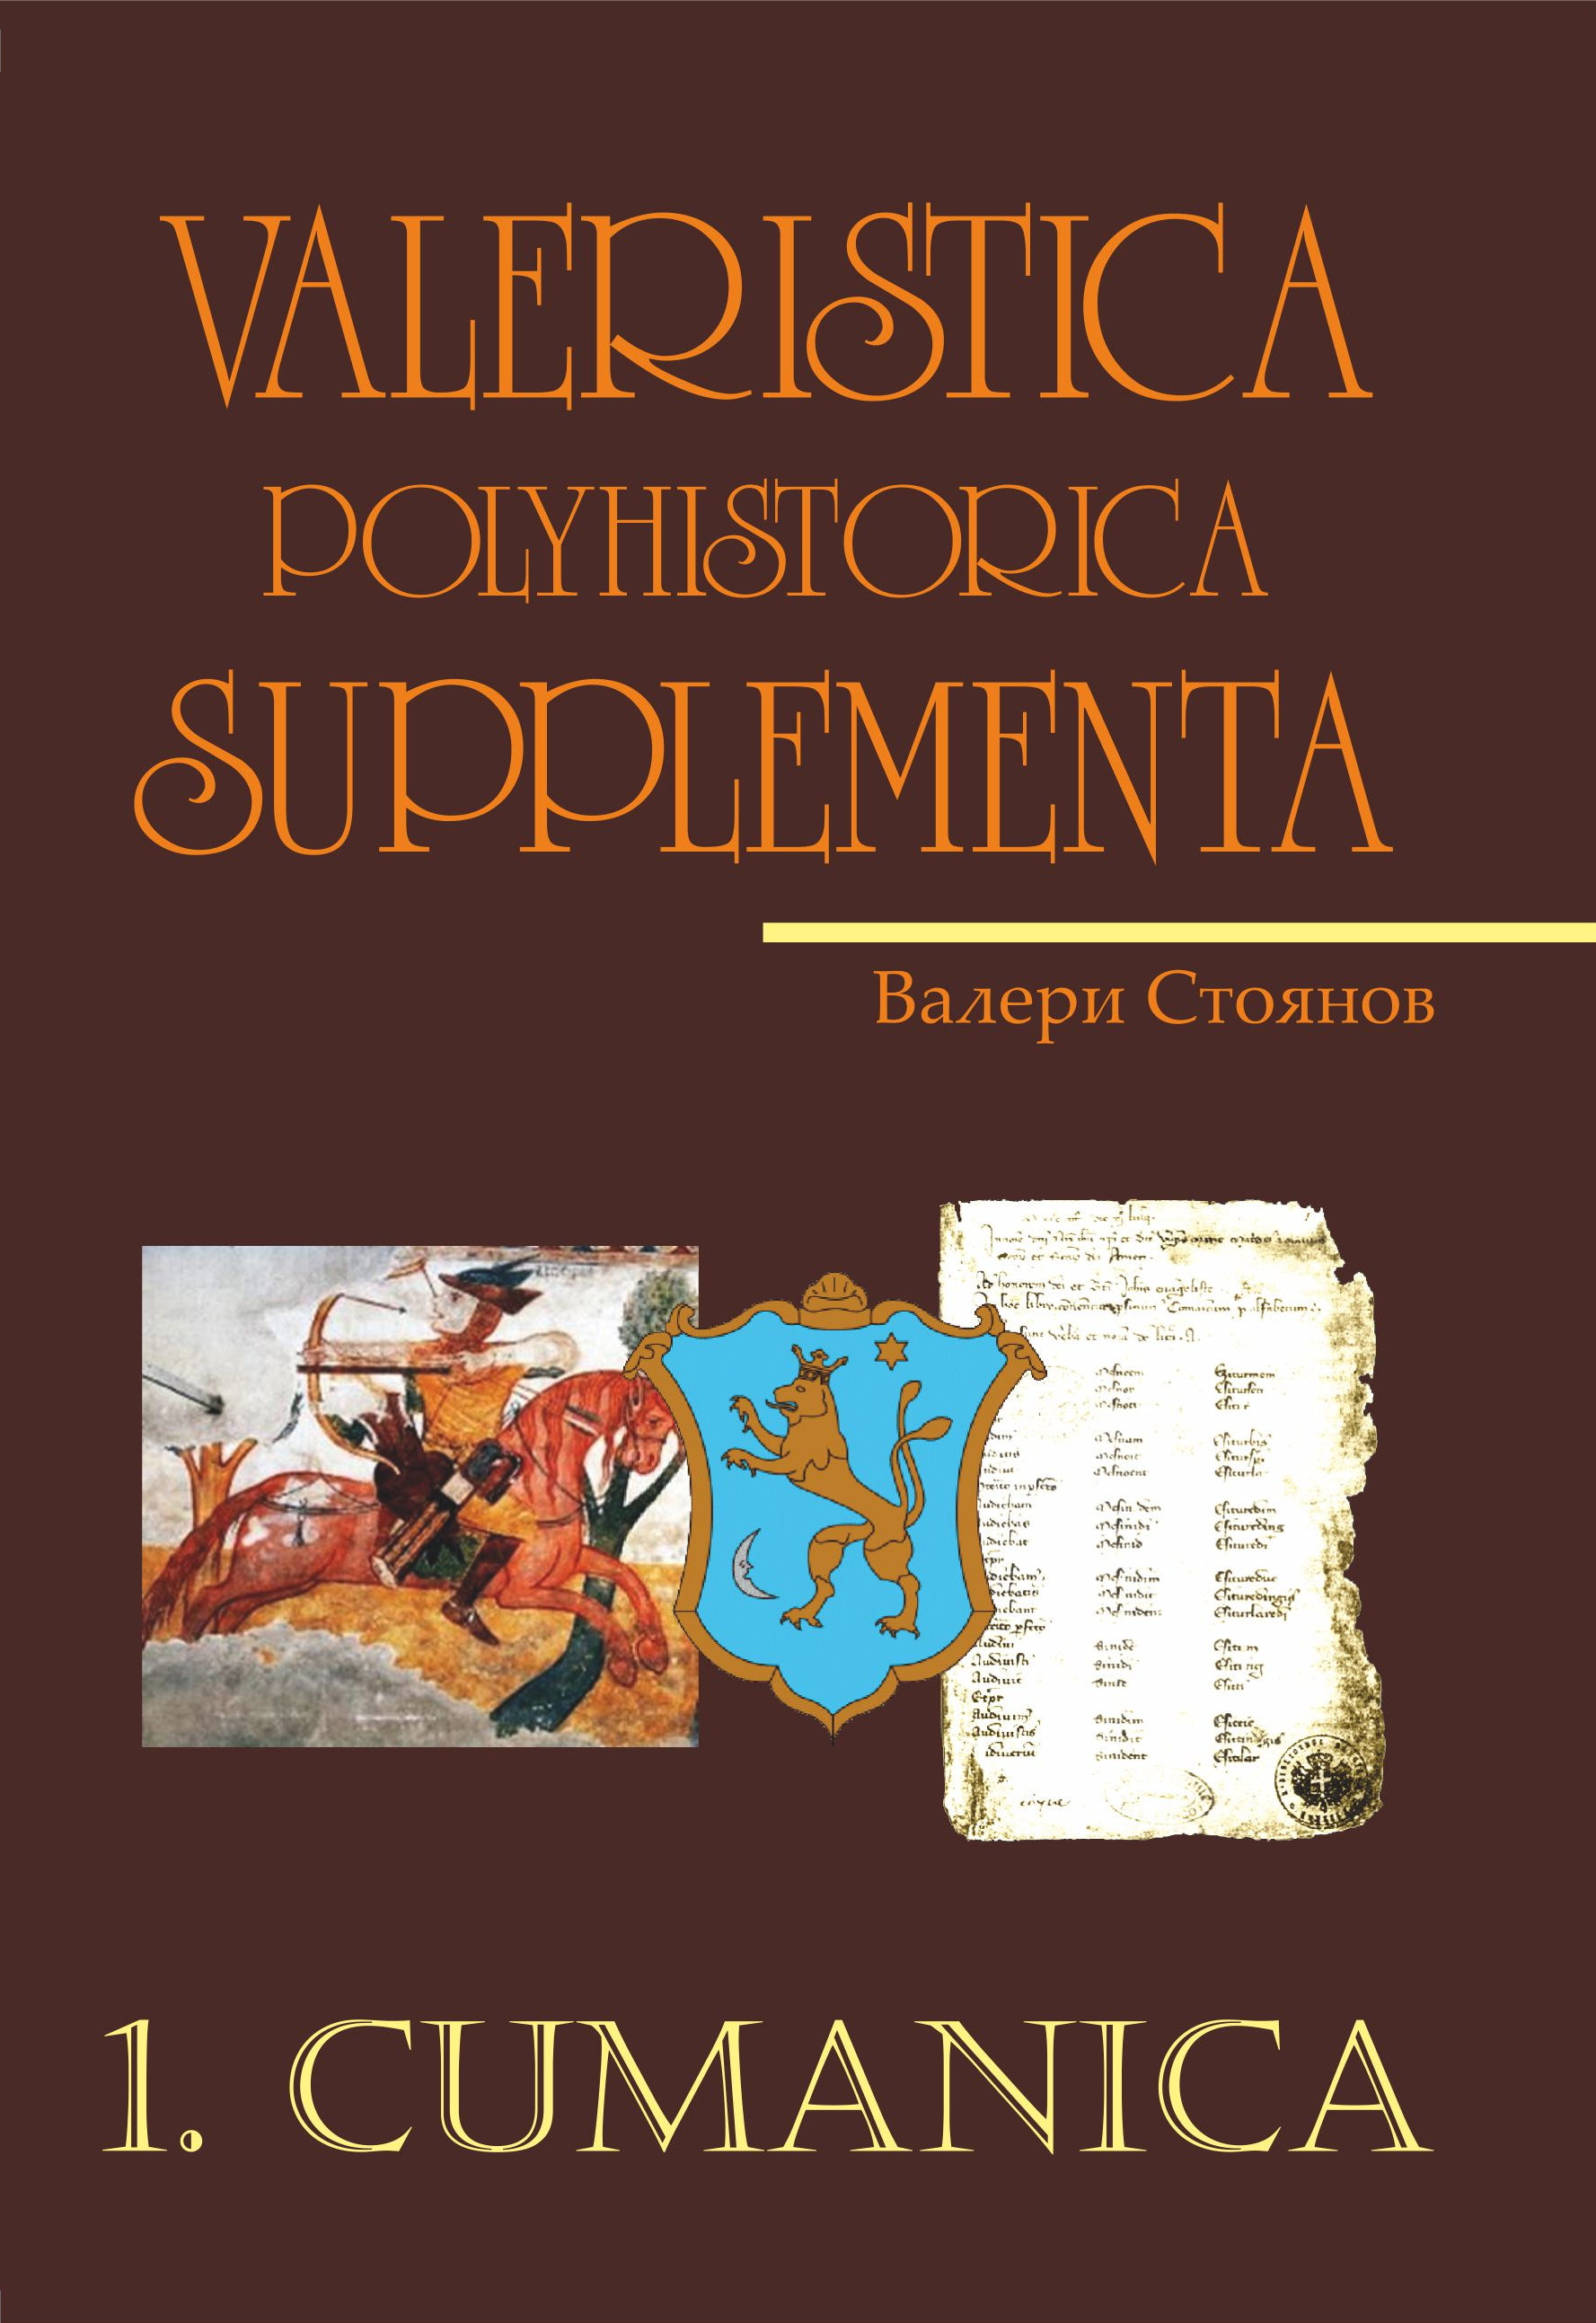 Valery Stojanow: Valeristica Polyhistorica Supplementa, vol. 1. Cumanica